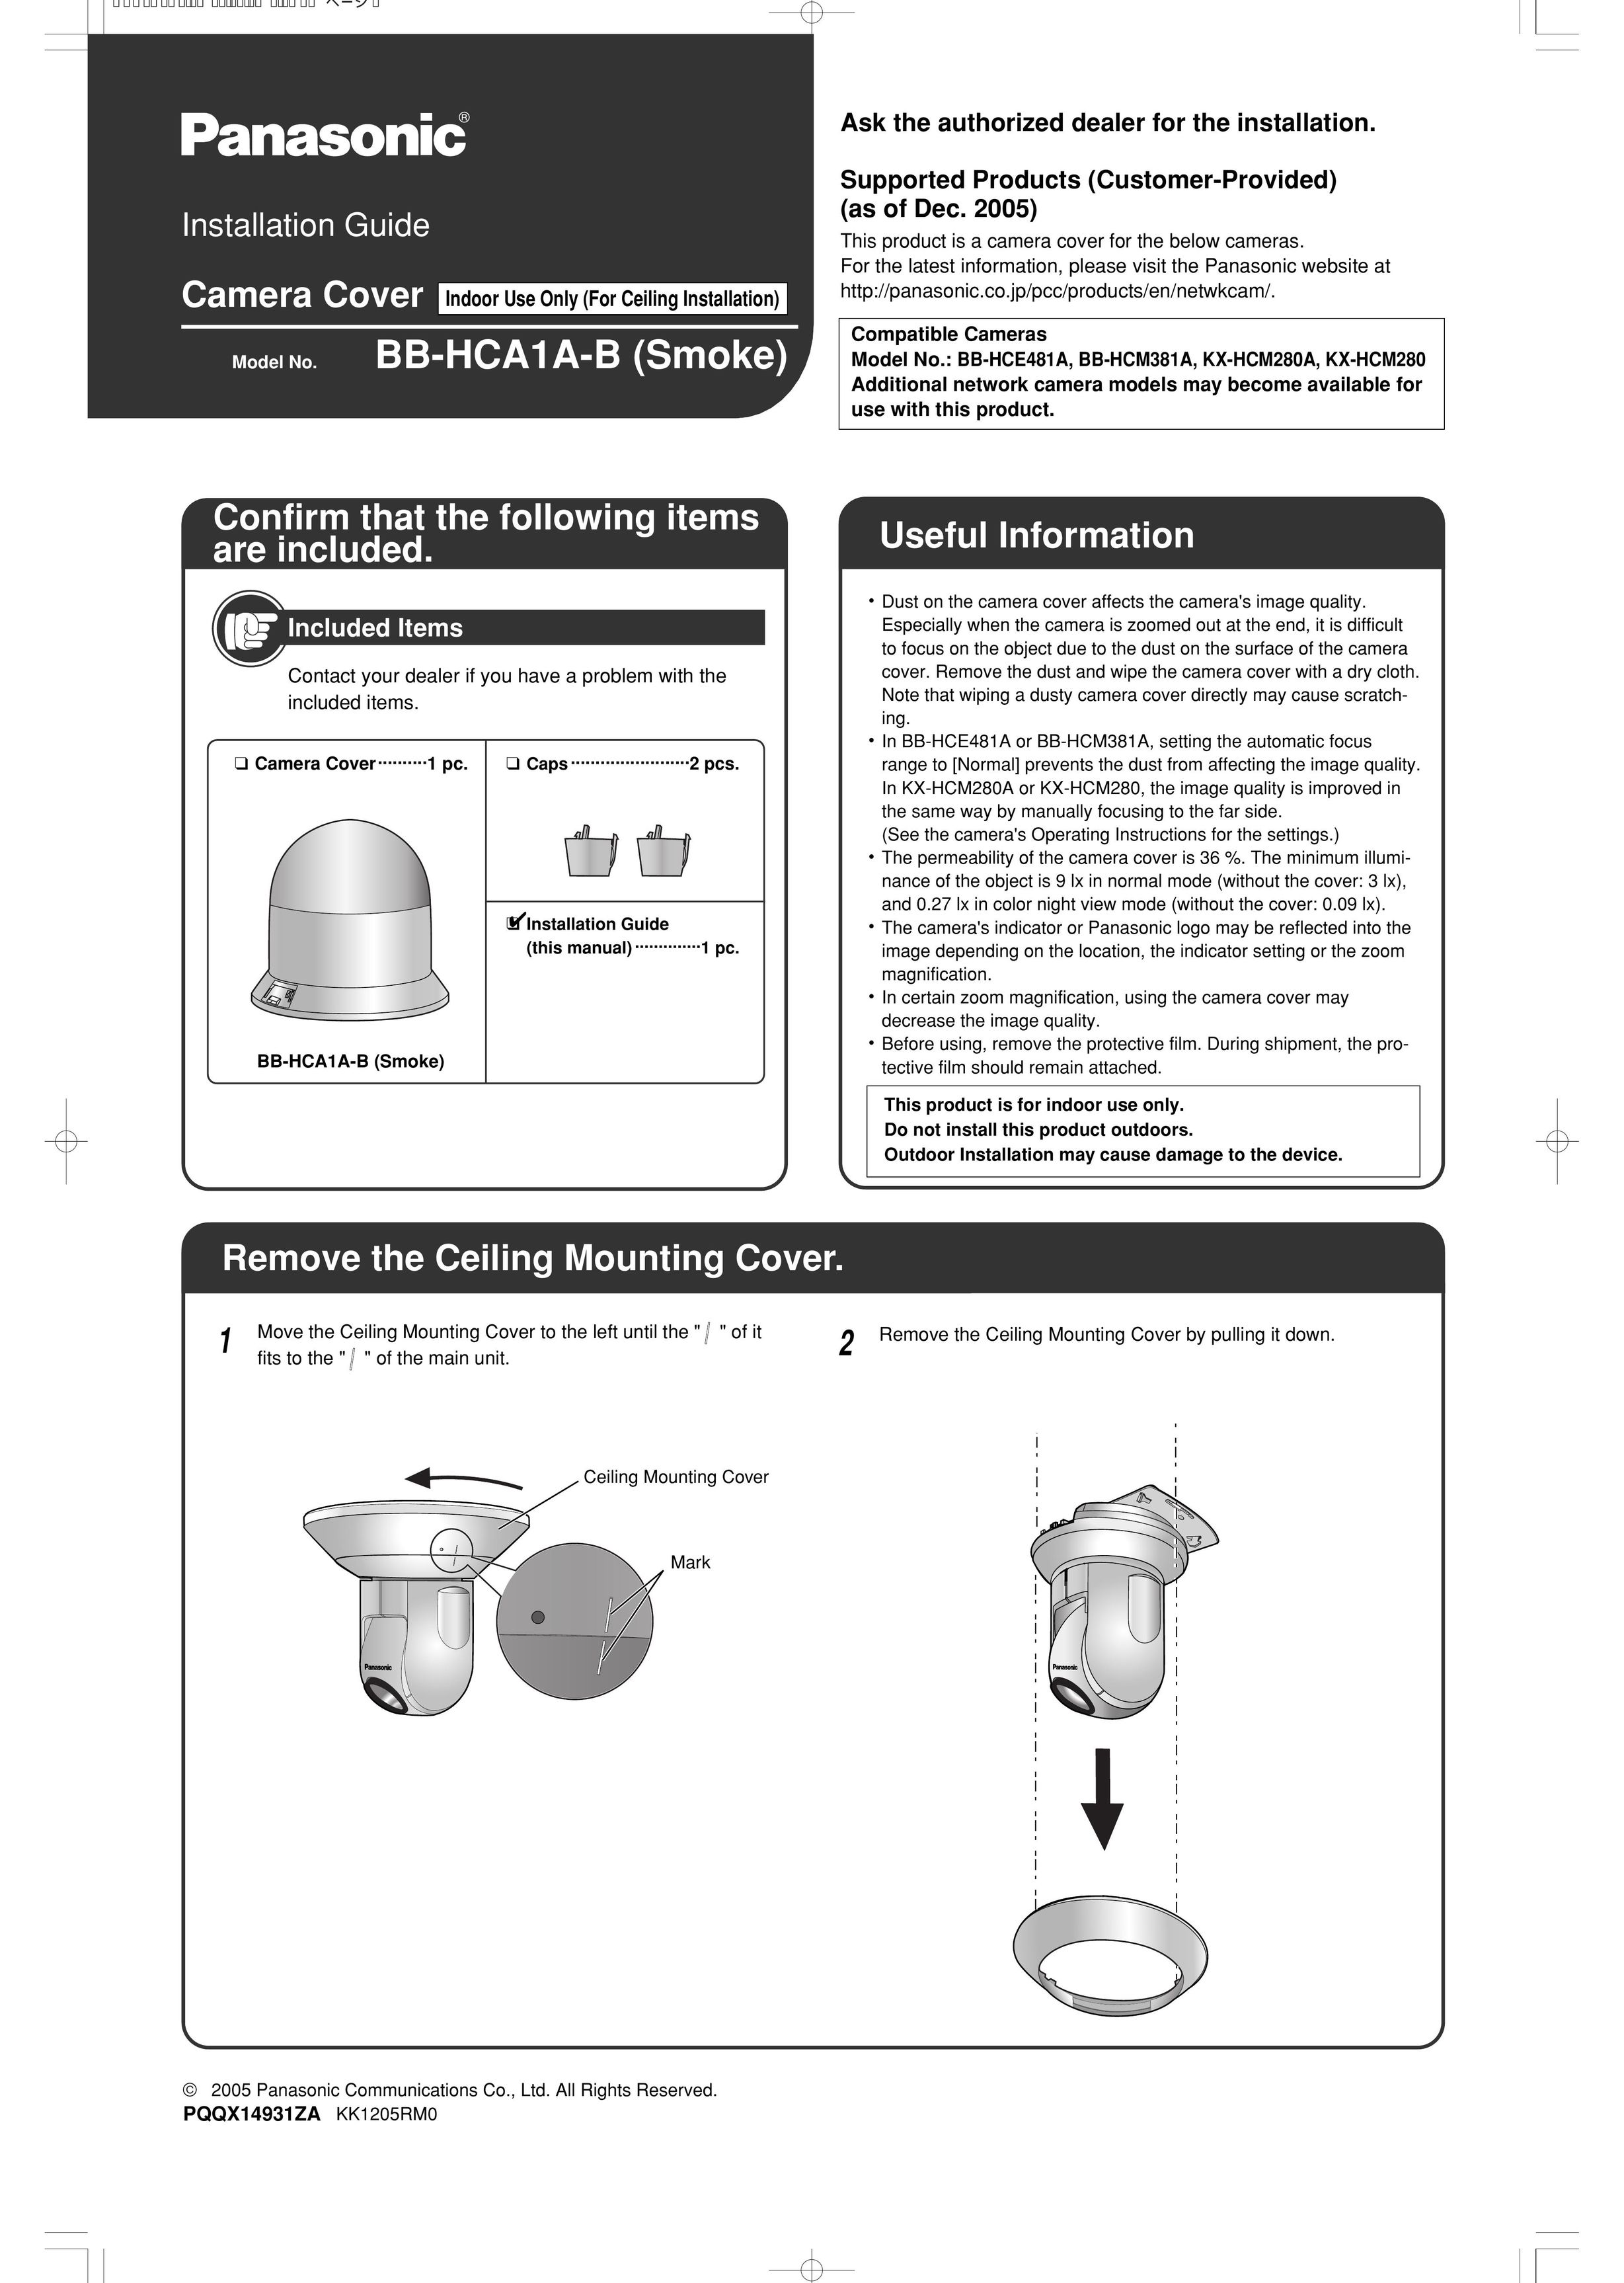 Panasonic Bb Hca1a B Home Security System User Manual